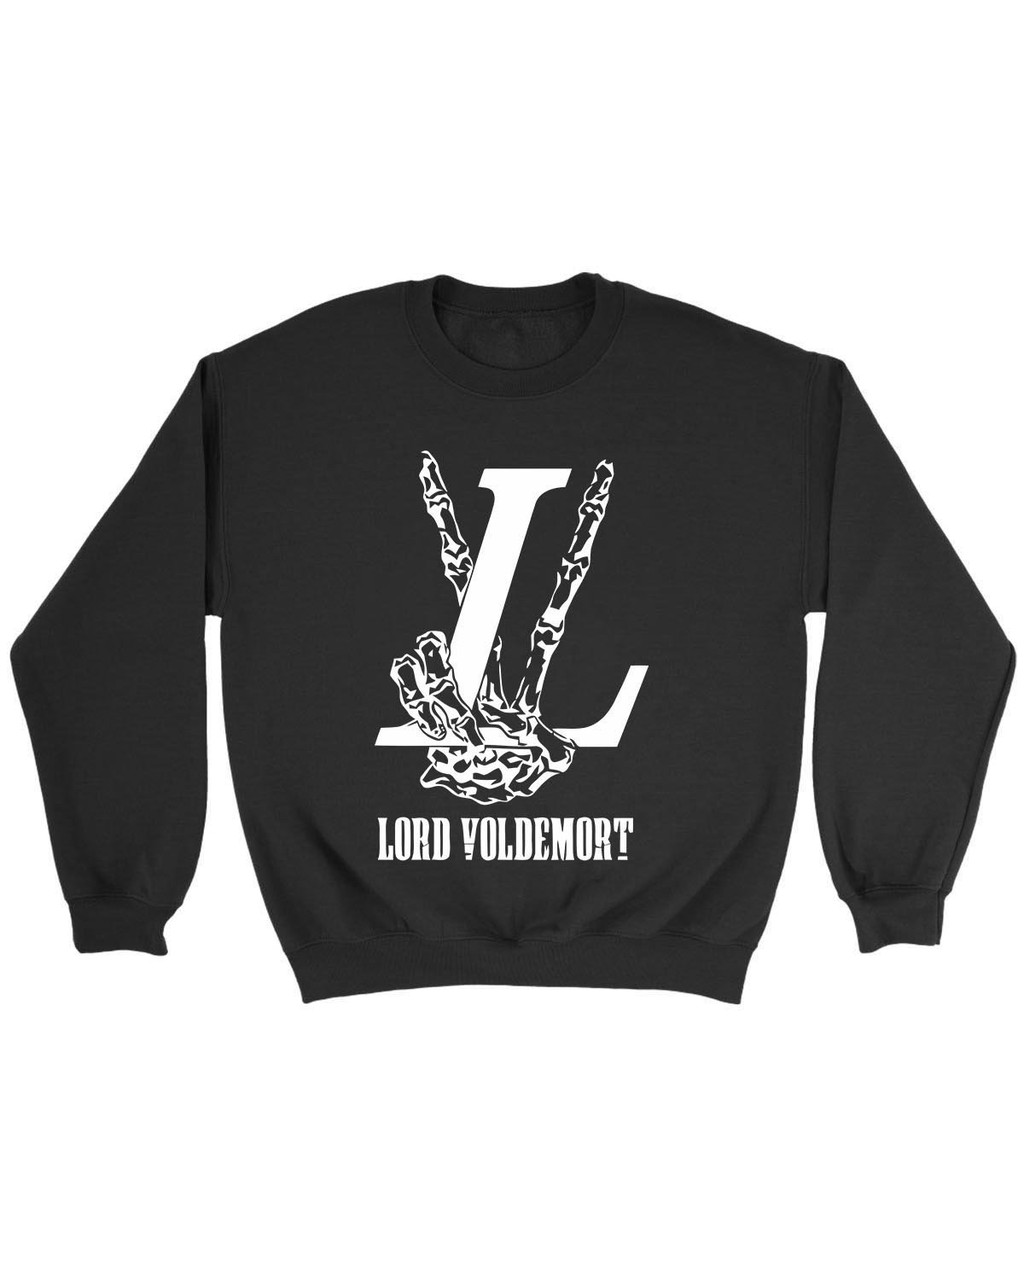 LV - Lord Voldemort